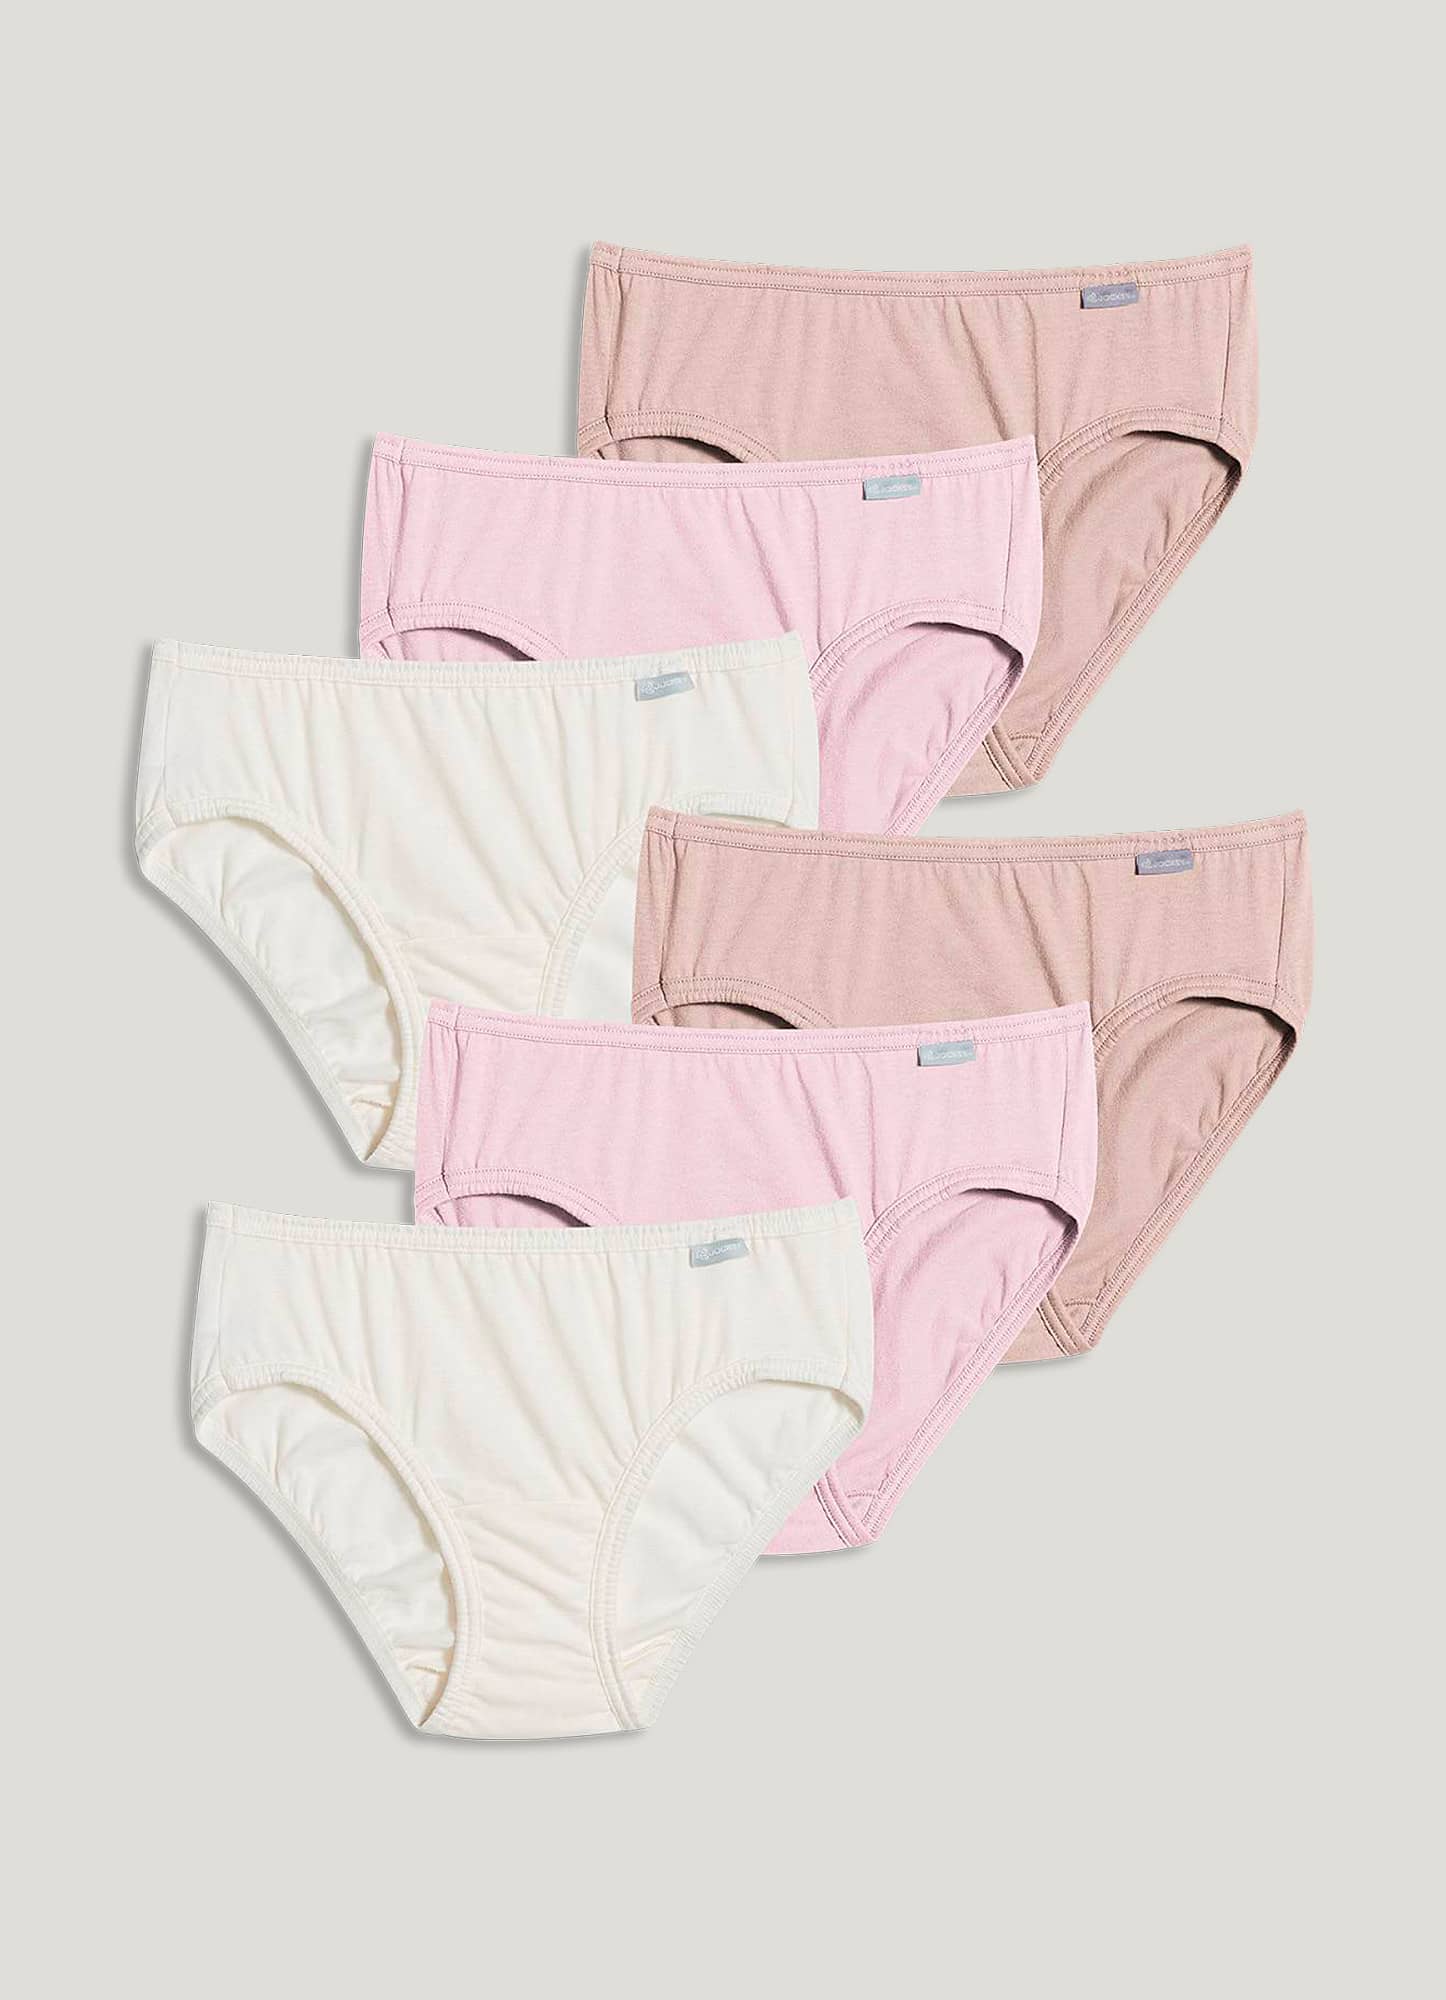 Jockey Women's Underwear Plus Size Elance Bikini - 6 Pack, Ivory/Light/Pink  Shadow, 9 at  Women's Clothing store